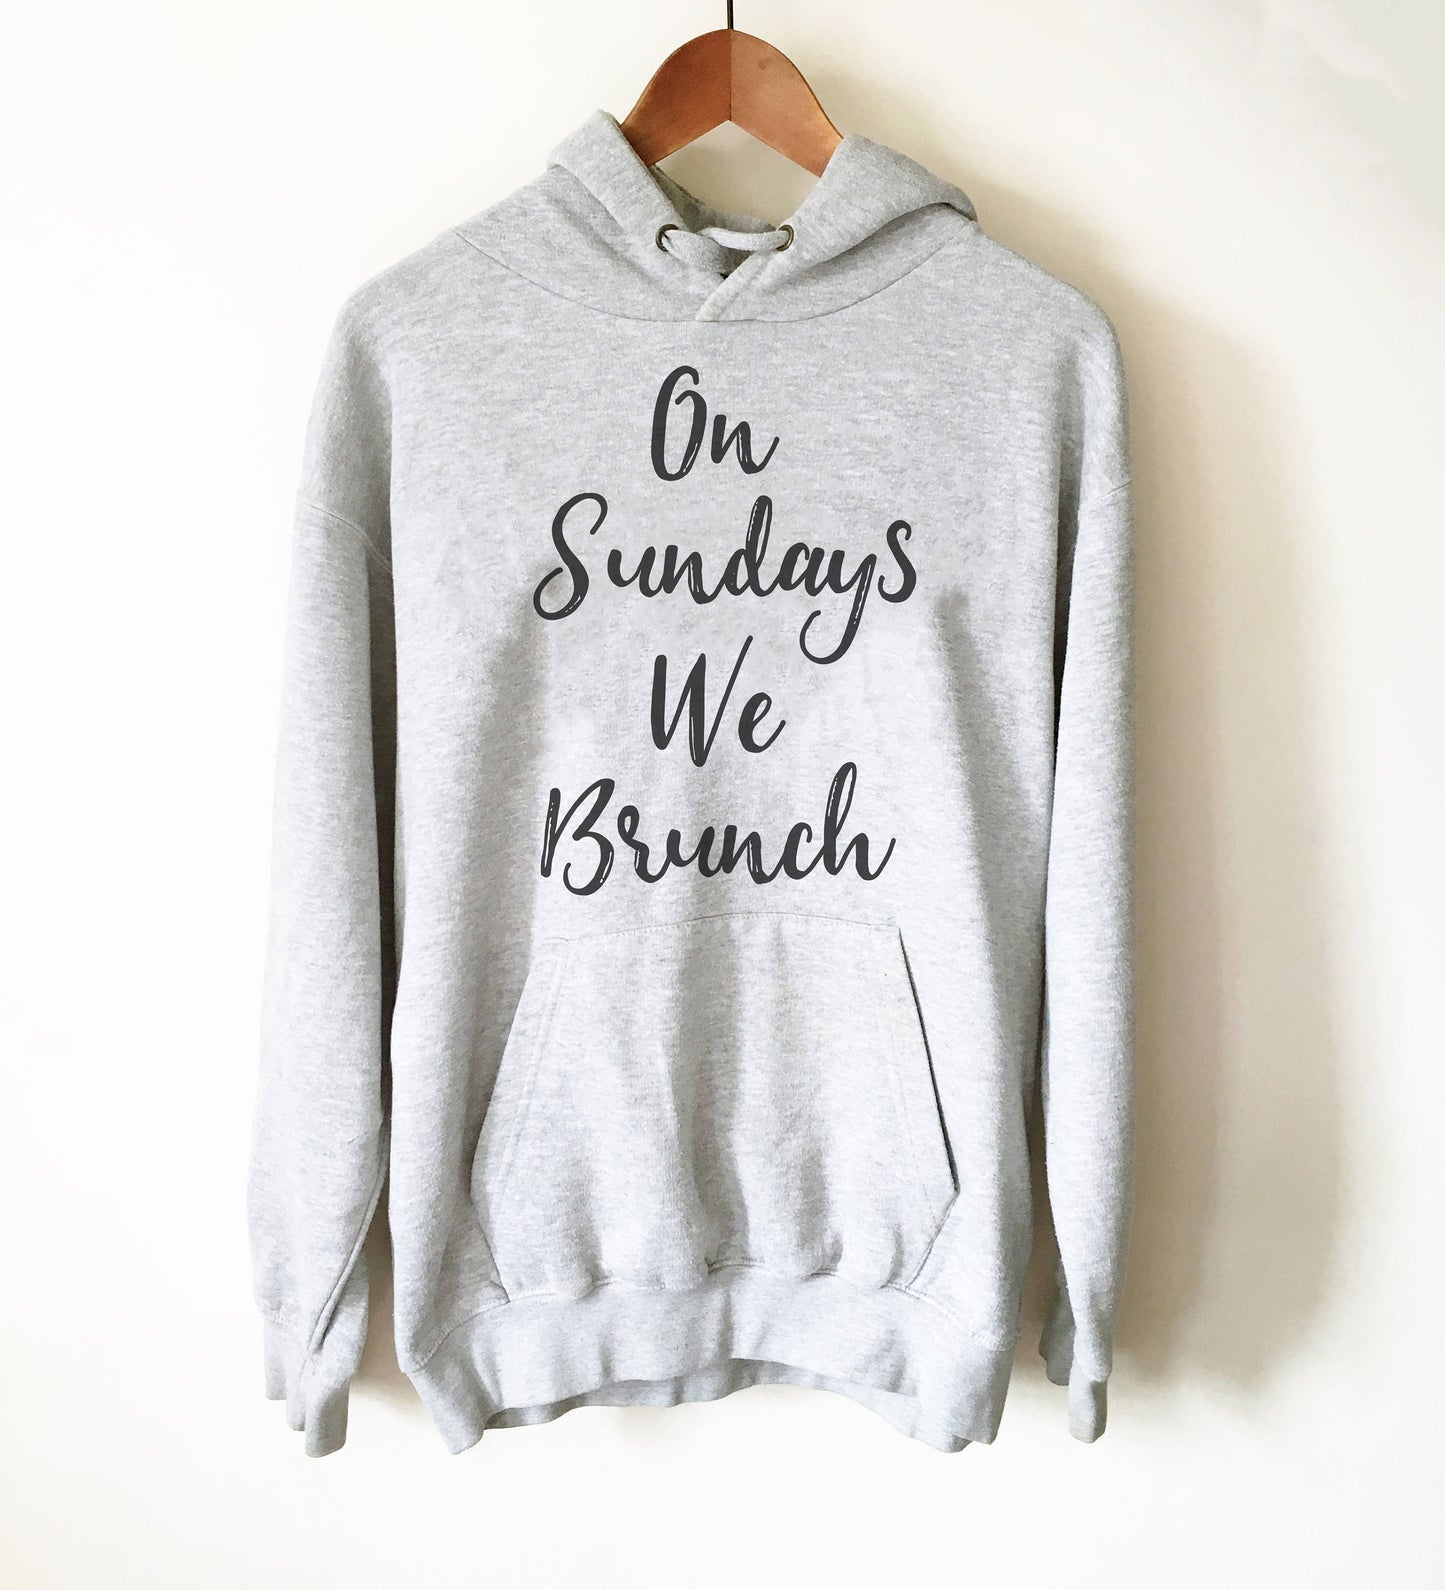 On Sundays We Brunch Hoodie - Brunch shirt | Sunday brunch shirt | Brunch and bubbly | Funny brunch shirt | Breakfast shirt